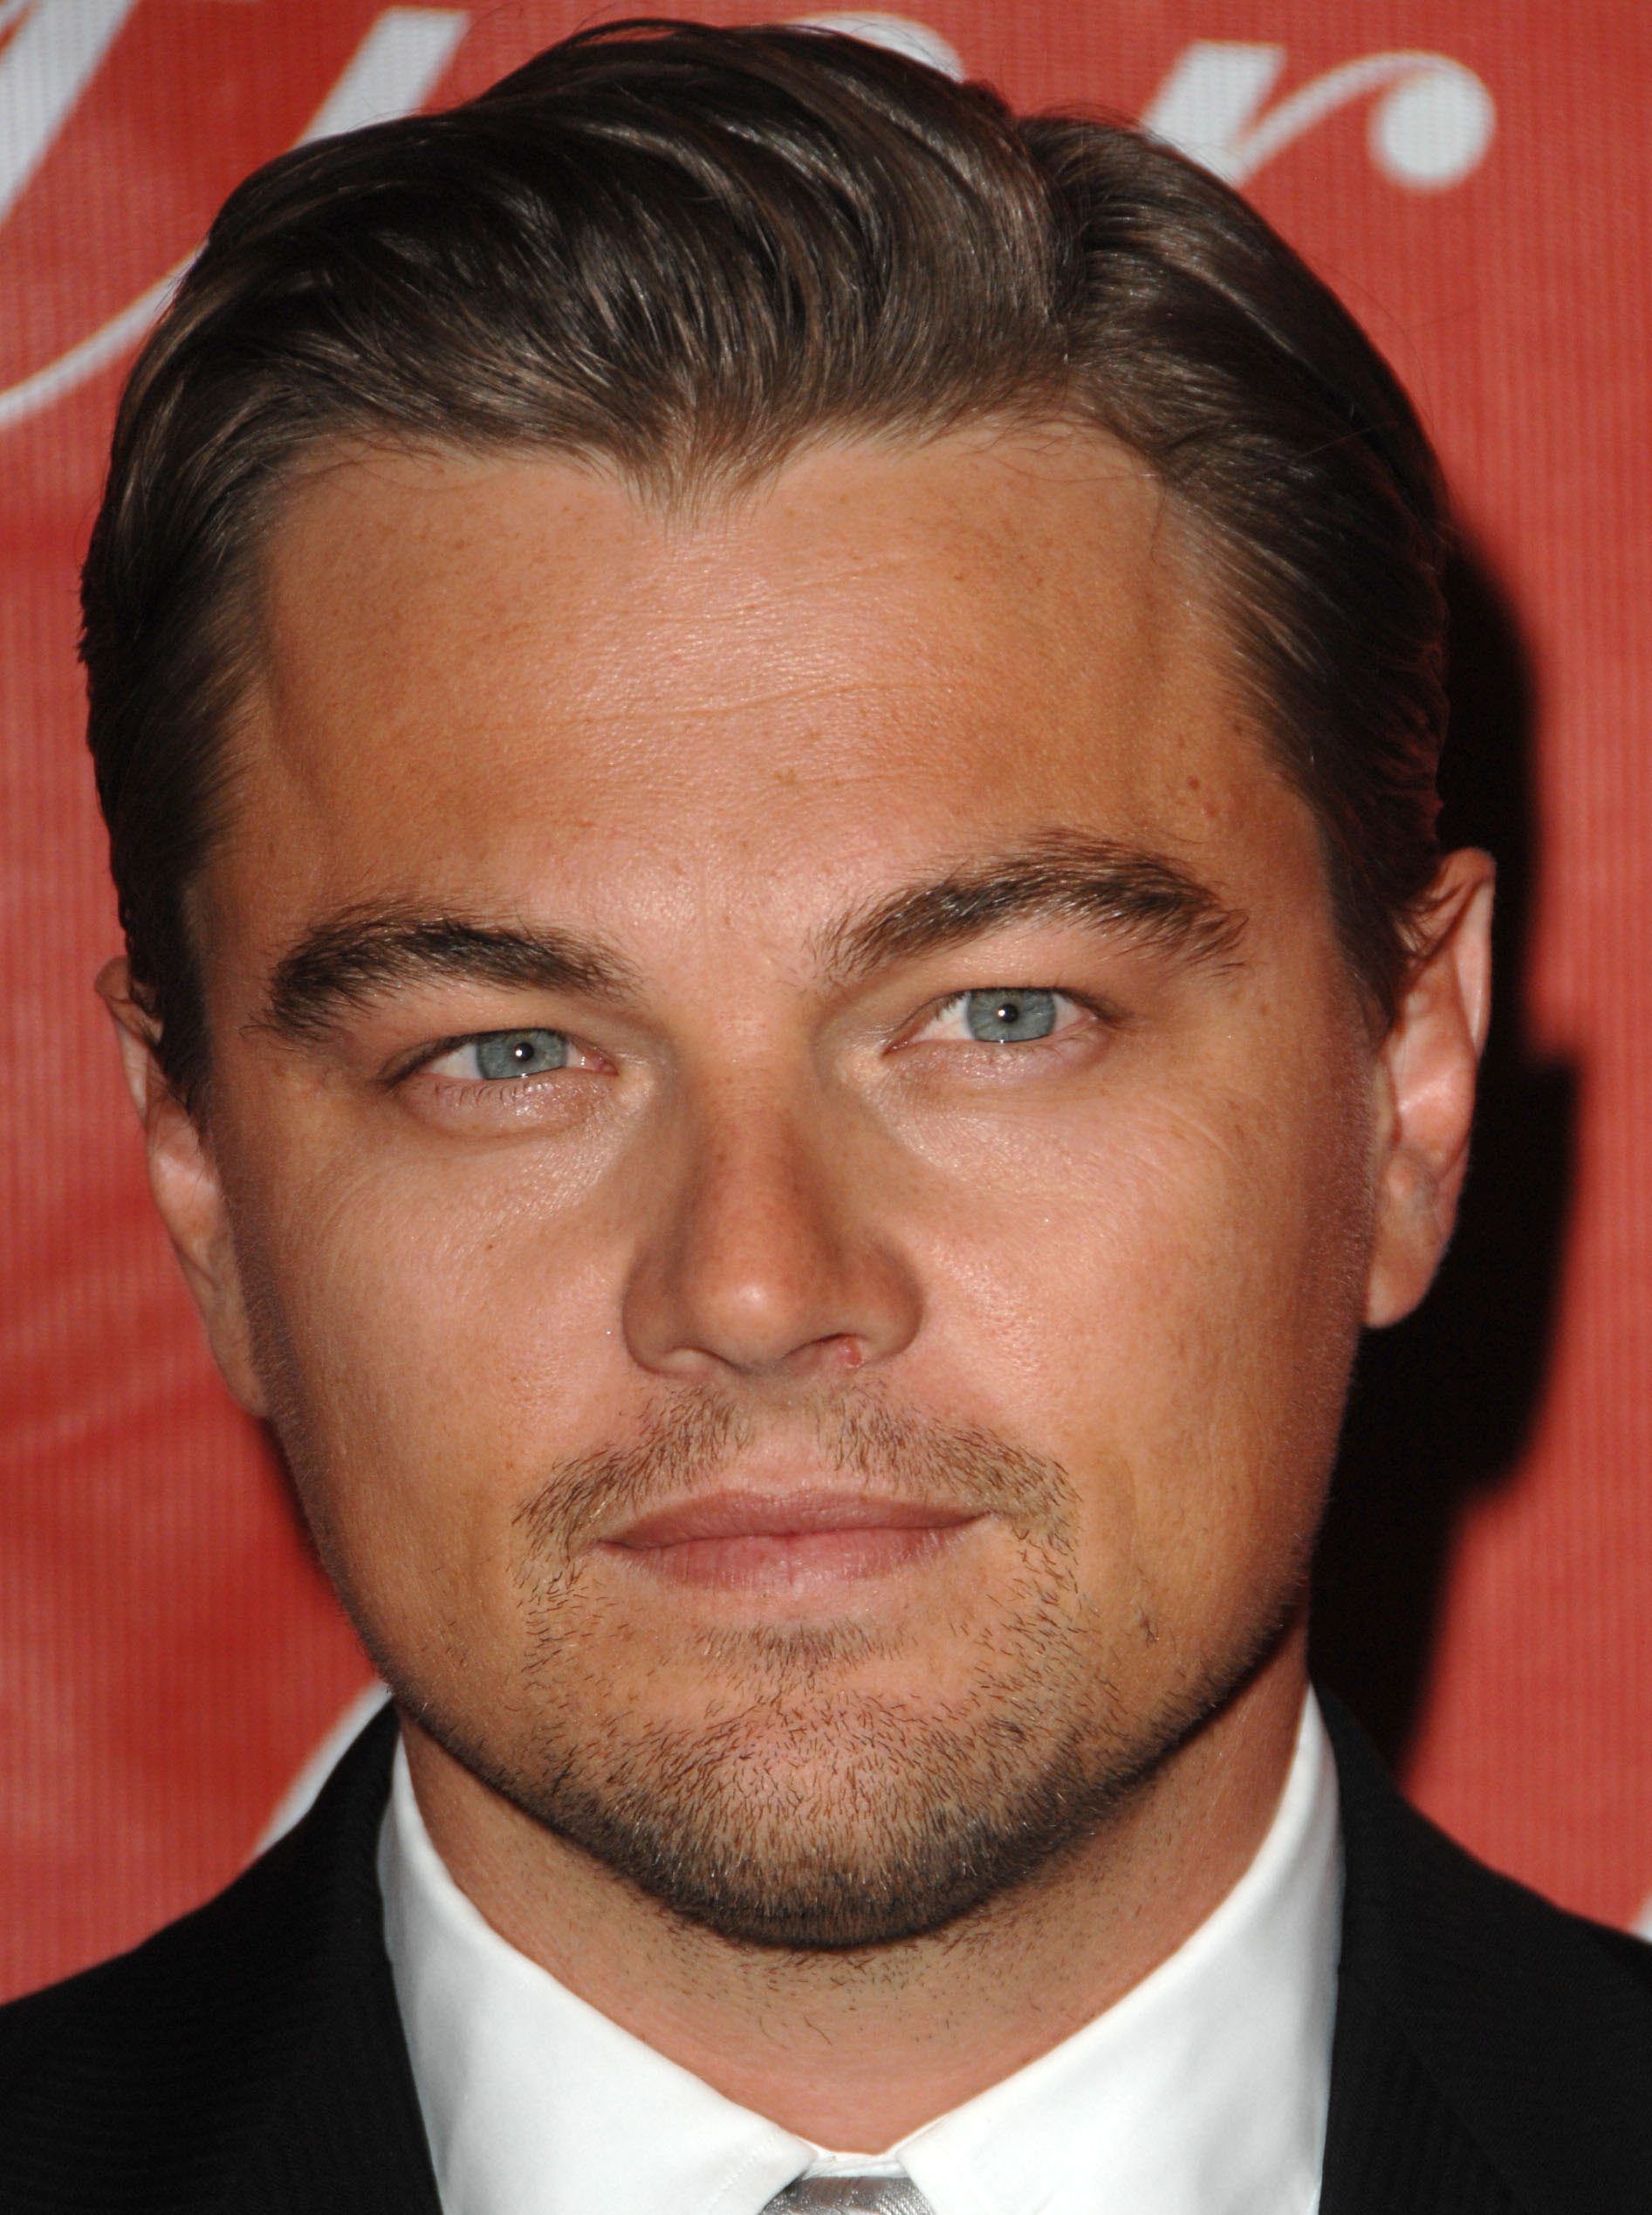 Leonardo DiCaprio besucht die Palm Springs Film Festival Gala am 6. Januar 2009 in Palm Springs, Kalifornien | Quelle: Getty Images